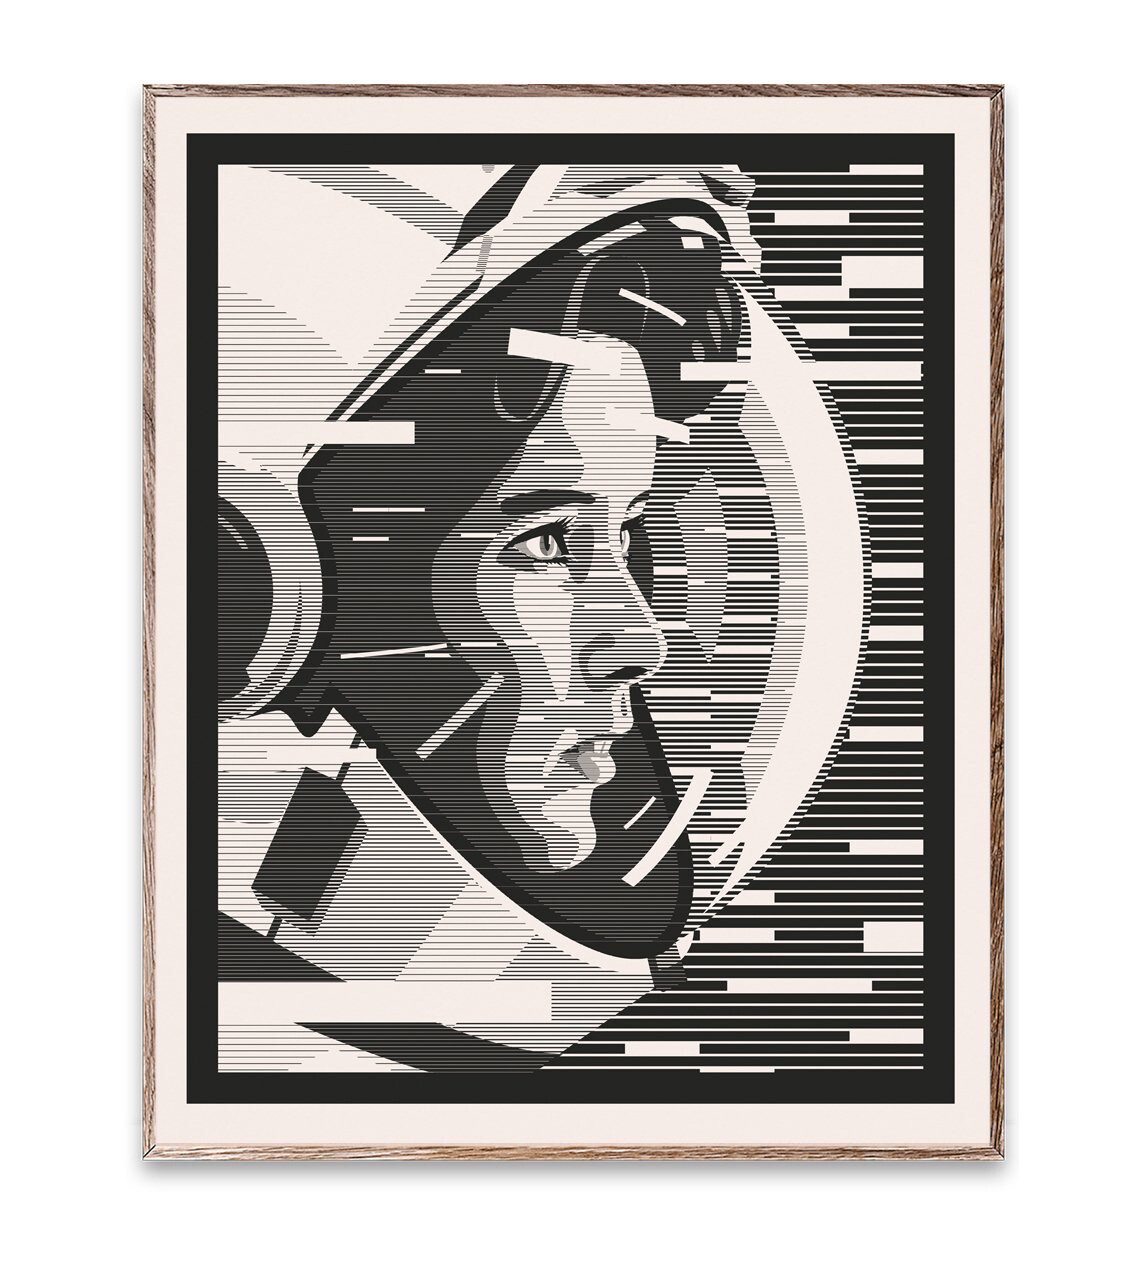 300g White Hahnemuhle Paper - Astronaut Artwork By B Bredenbekk